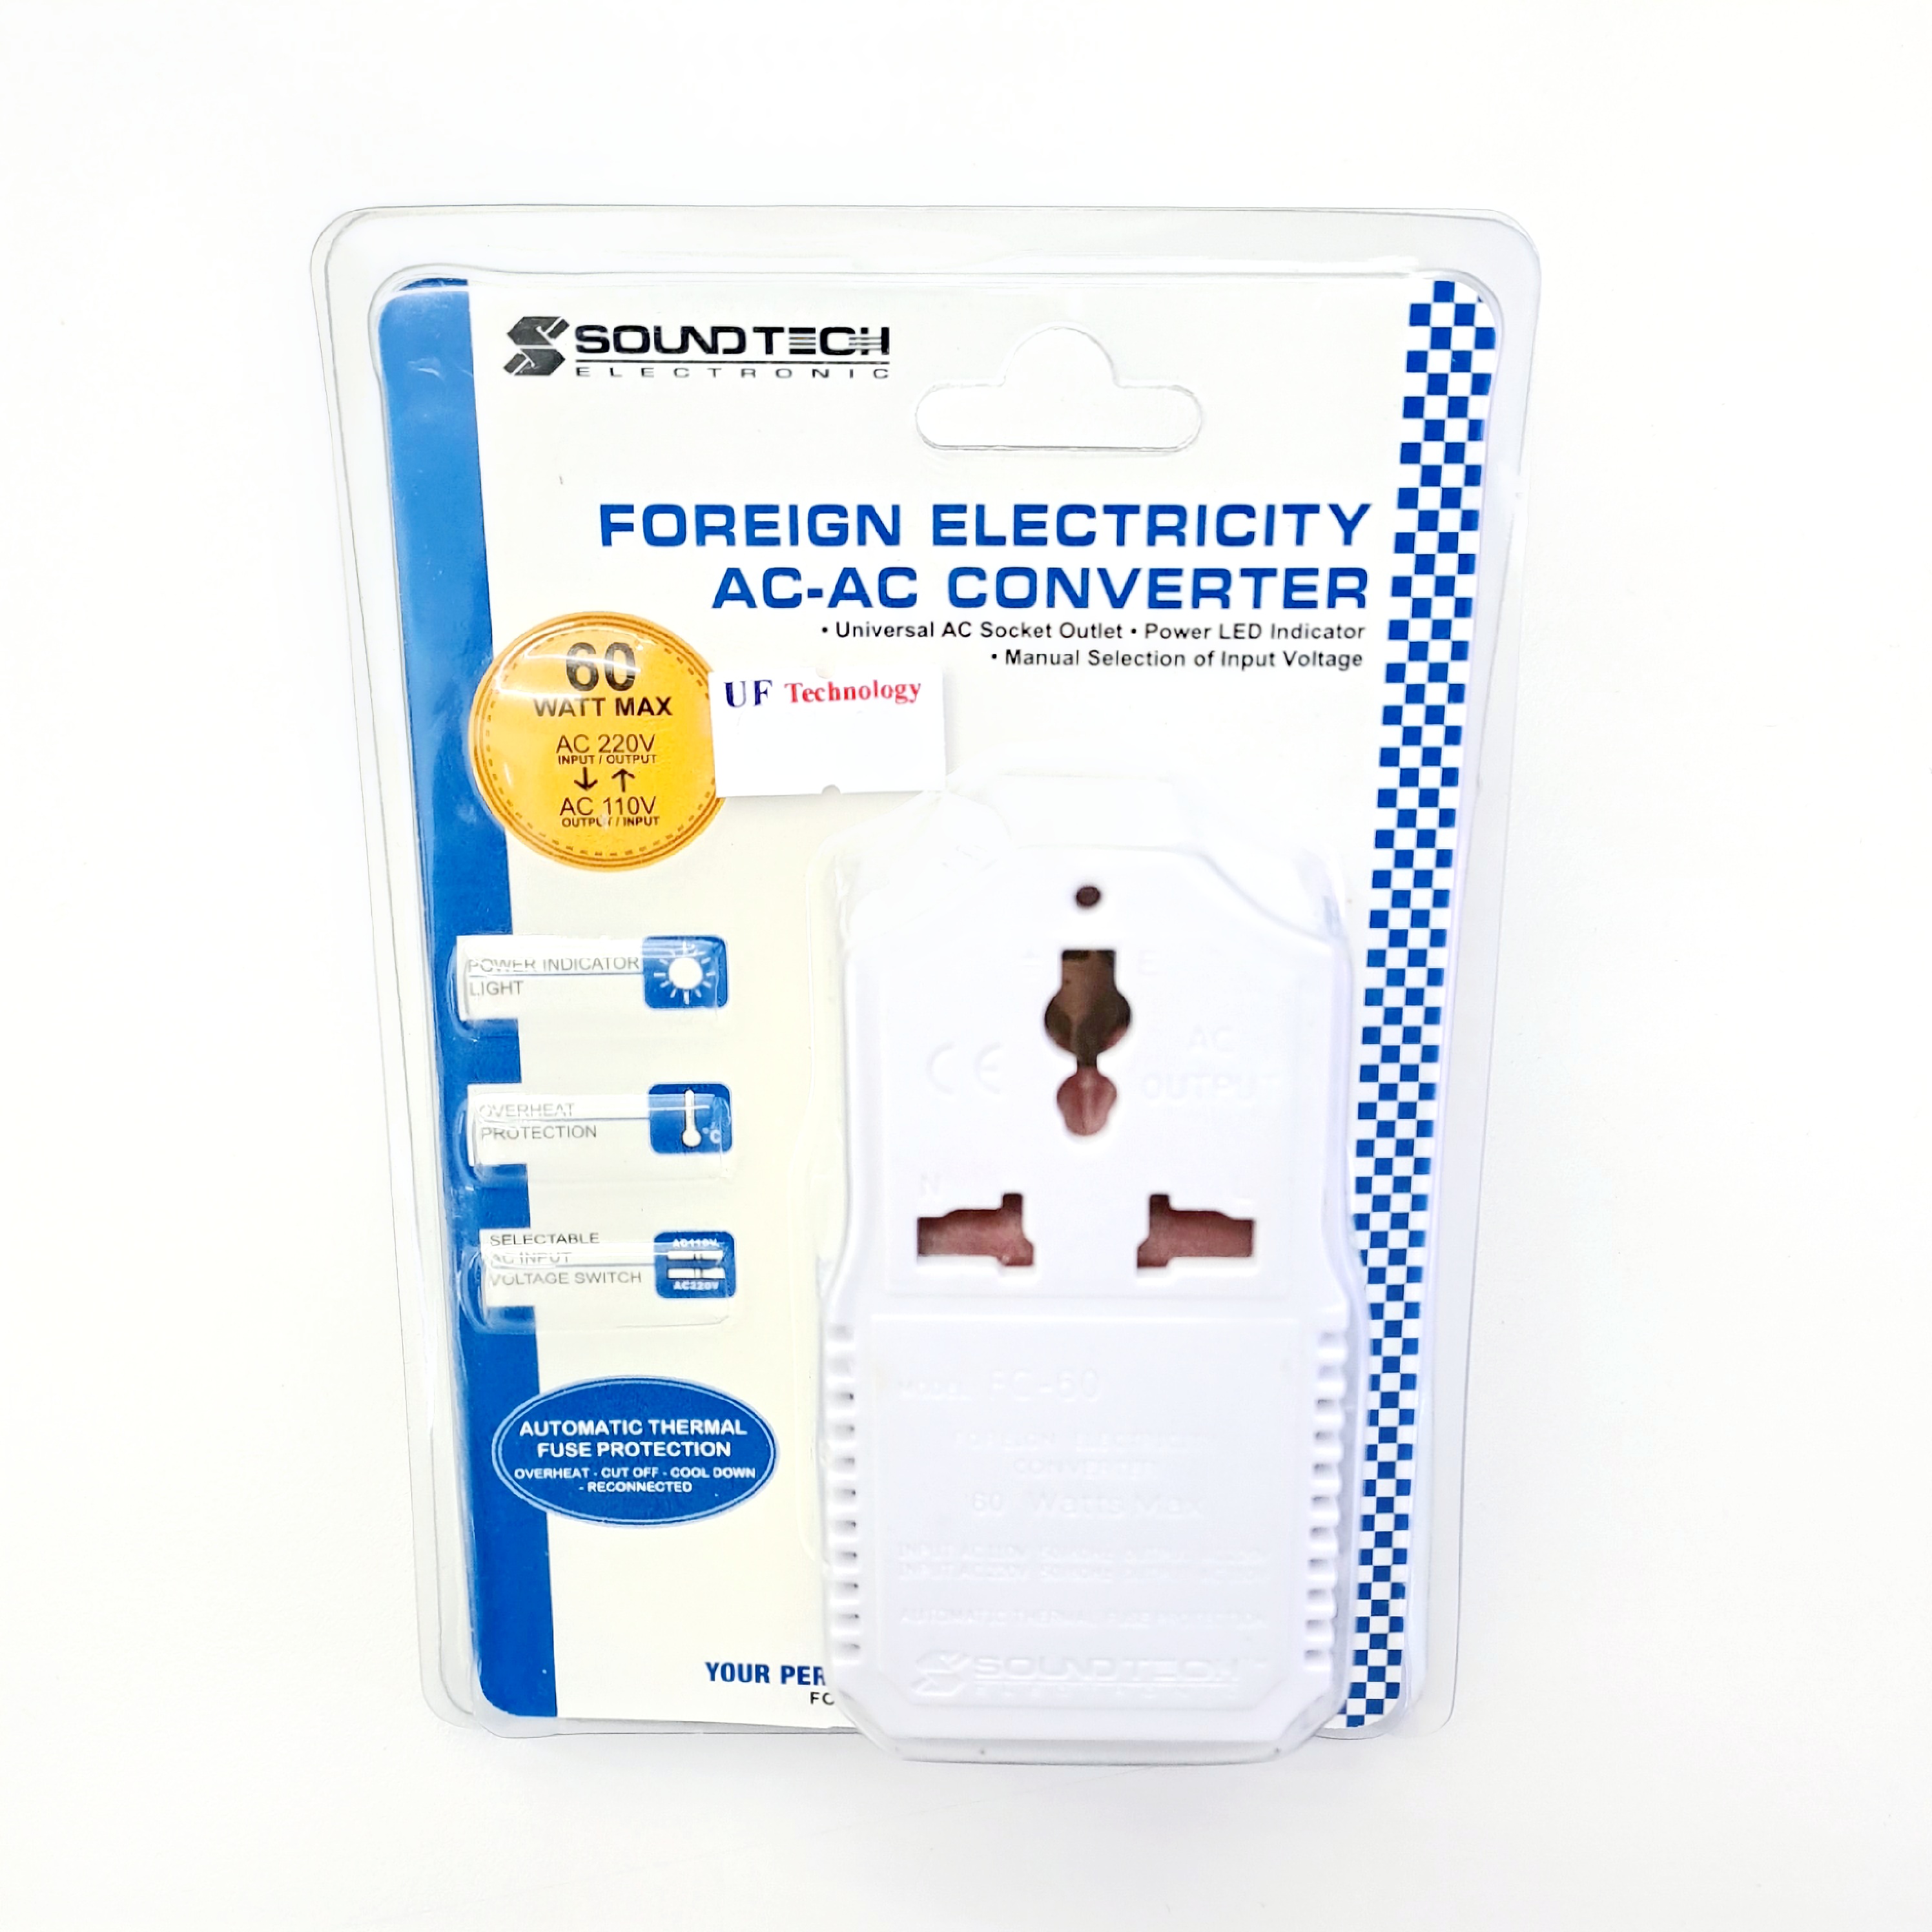 Soundtech Foreign Electricity AC-AC Converter 60W